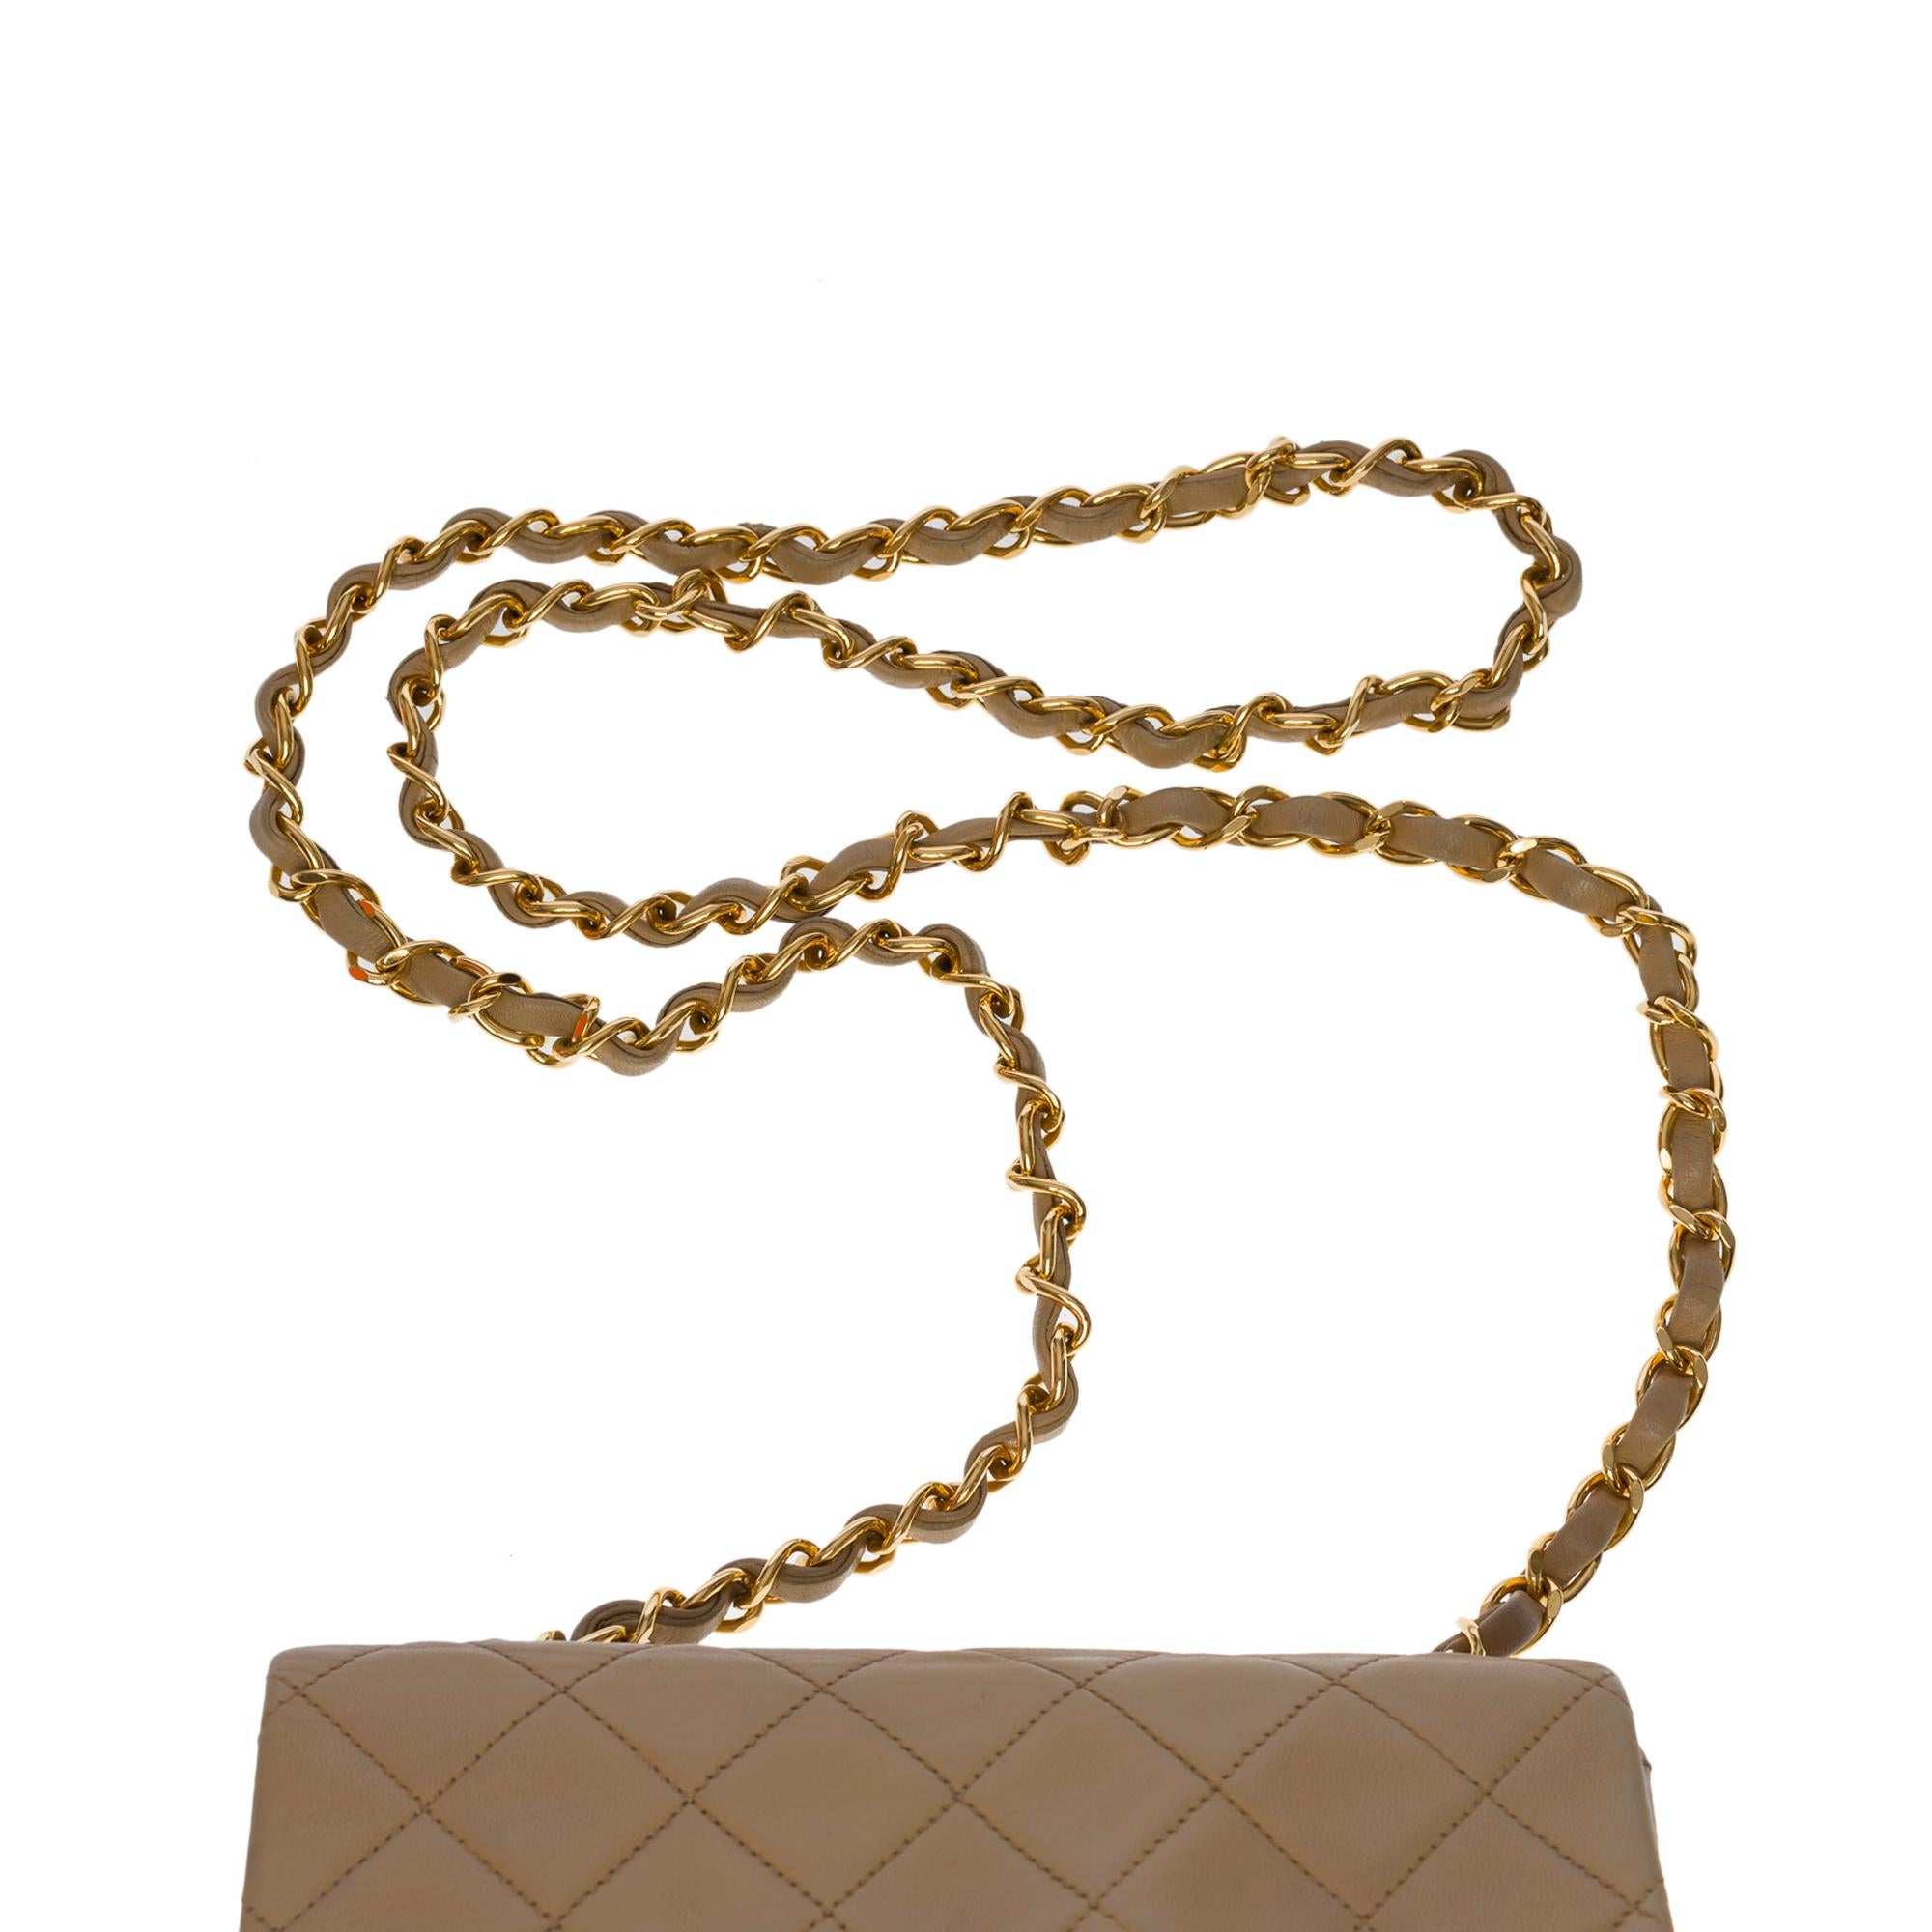 Splendid Chanel Timeless Mini Flap bag in beige quilted lambskin, GHW 6